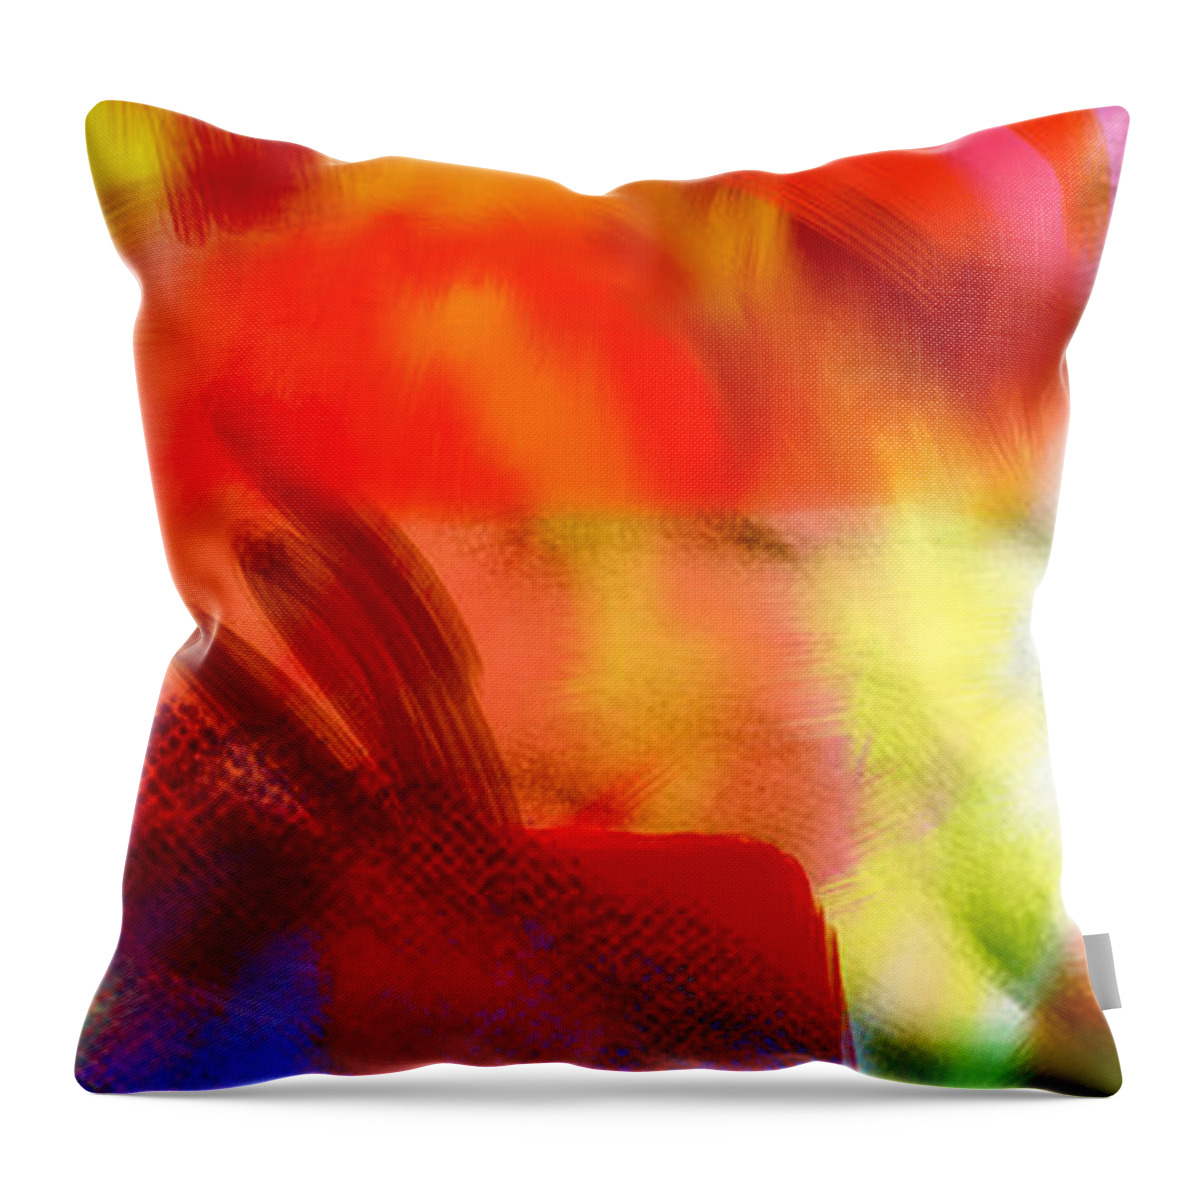 Color Throw Pillow featuring the digital art Color Fog by Joe Roache